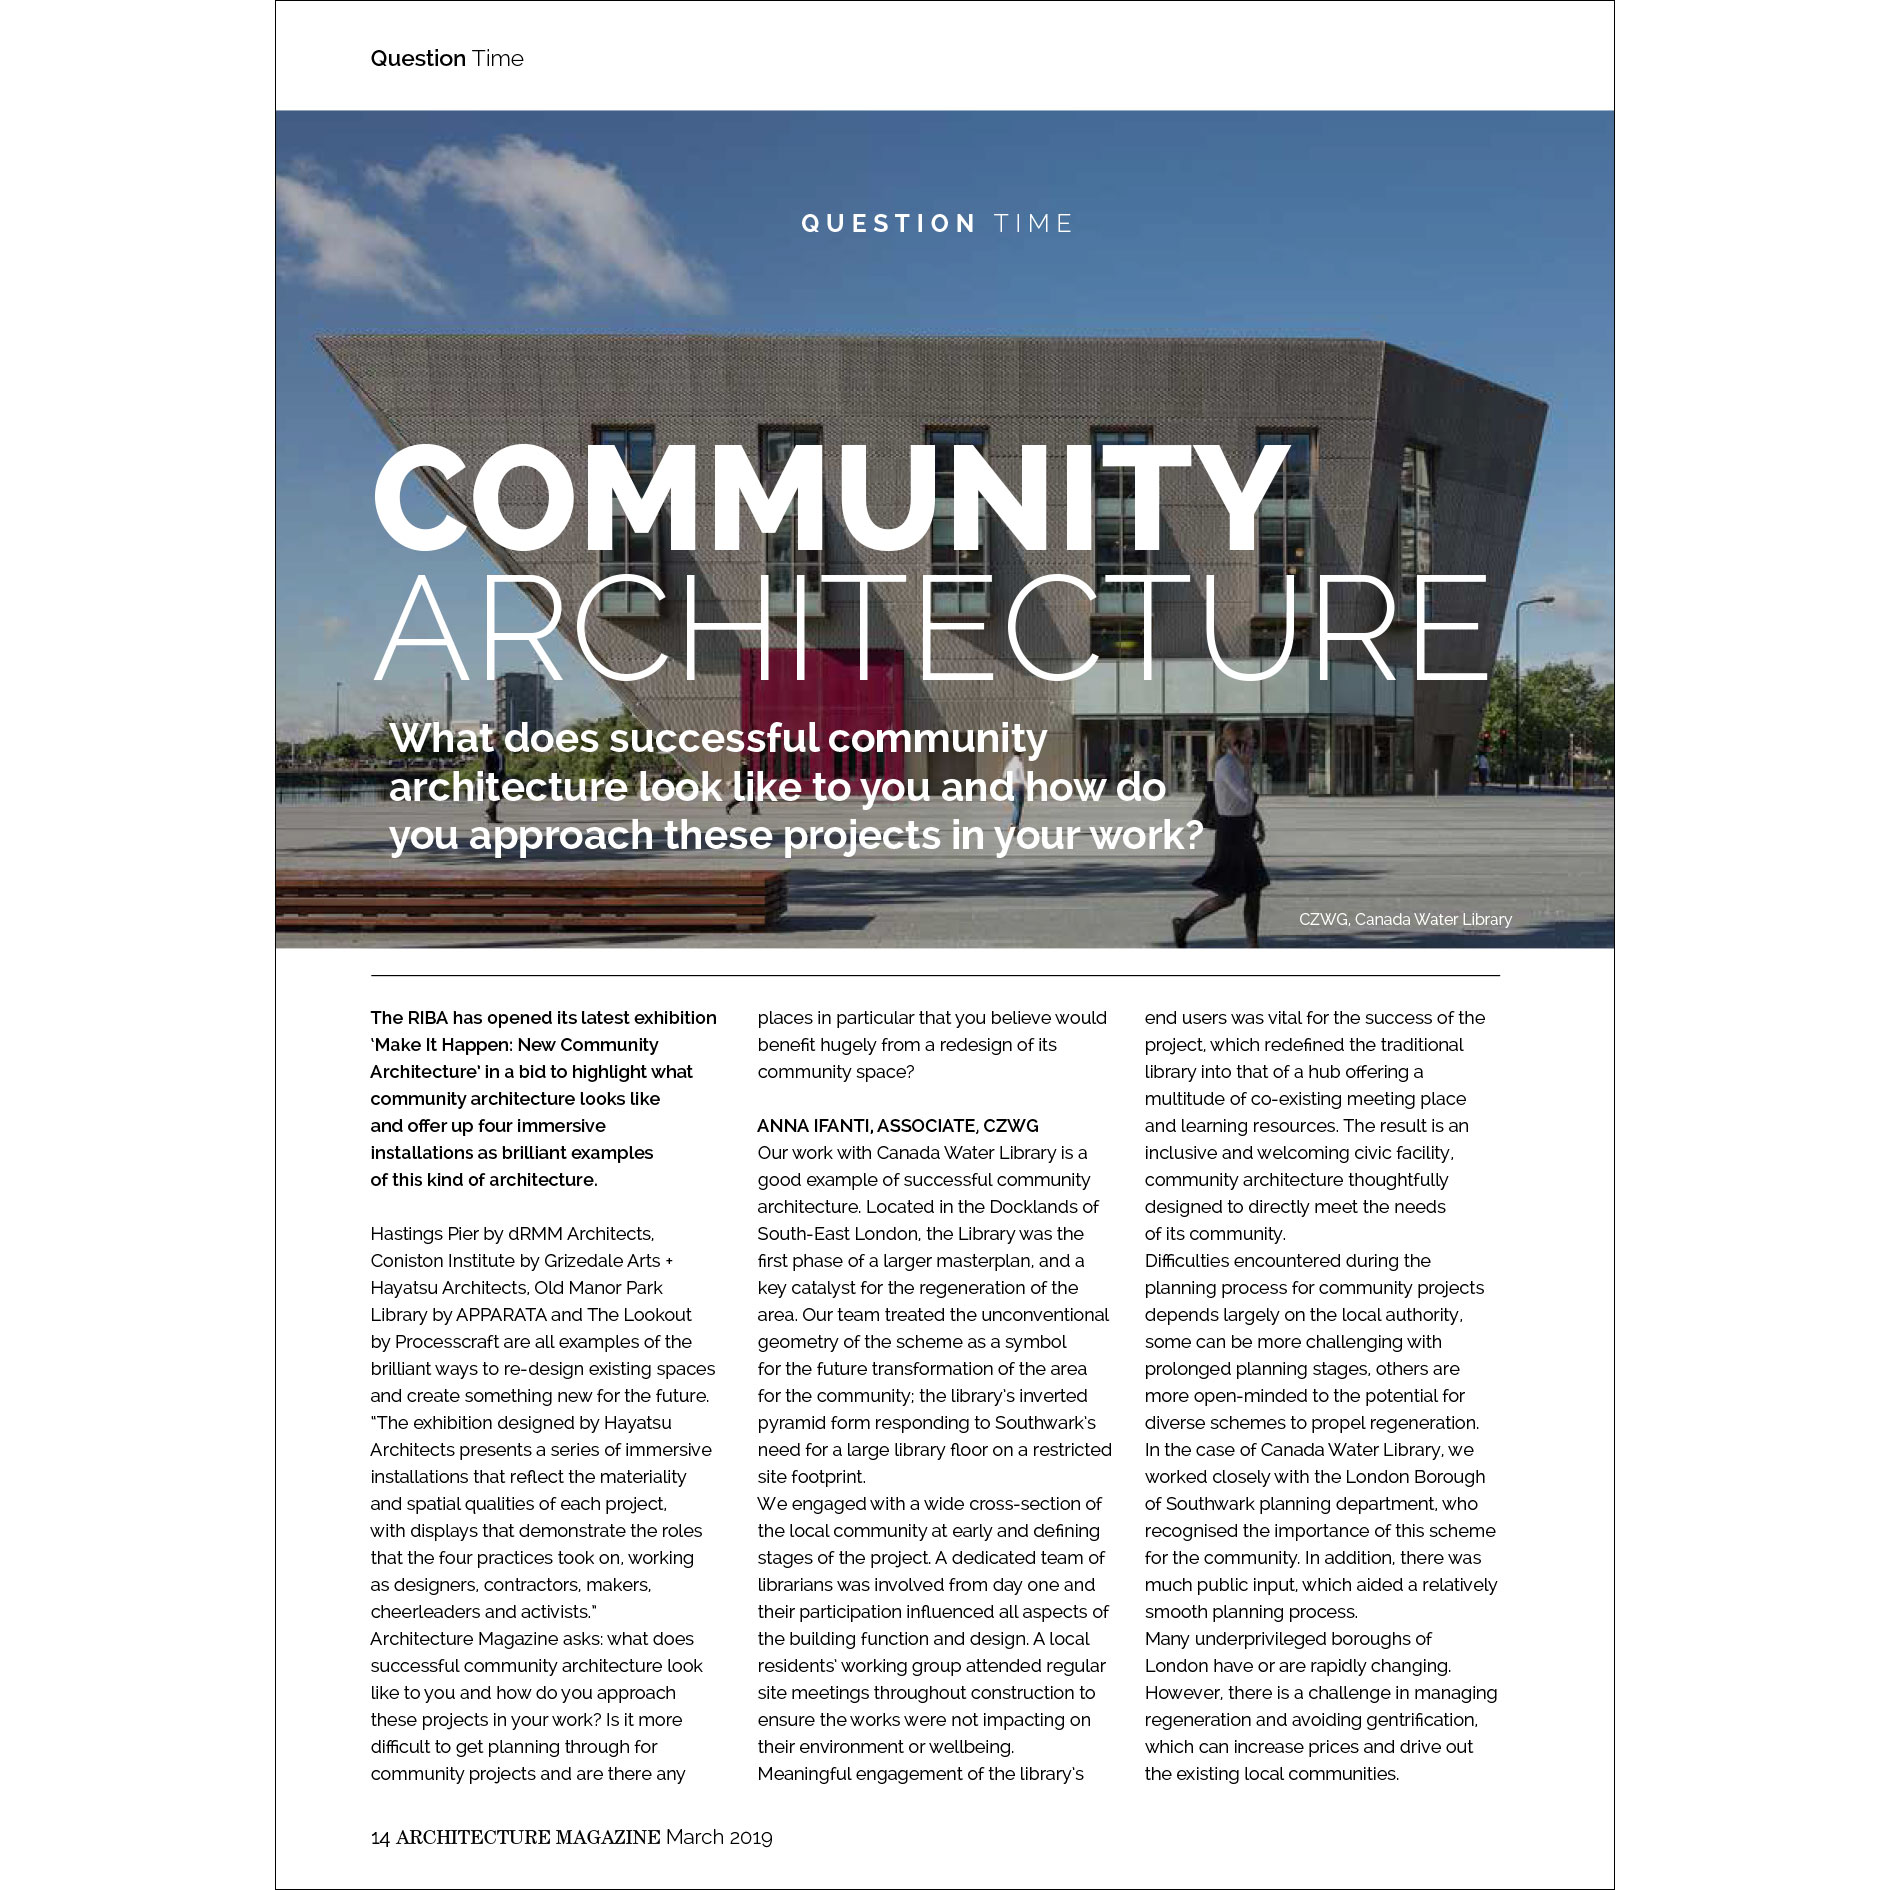 19-03-01-Canada-Water-featured-in-Architecture-Magazine.jpg